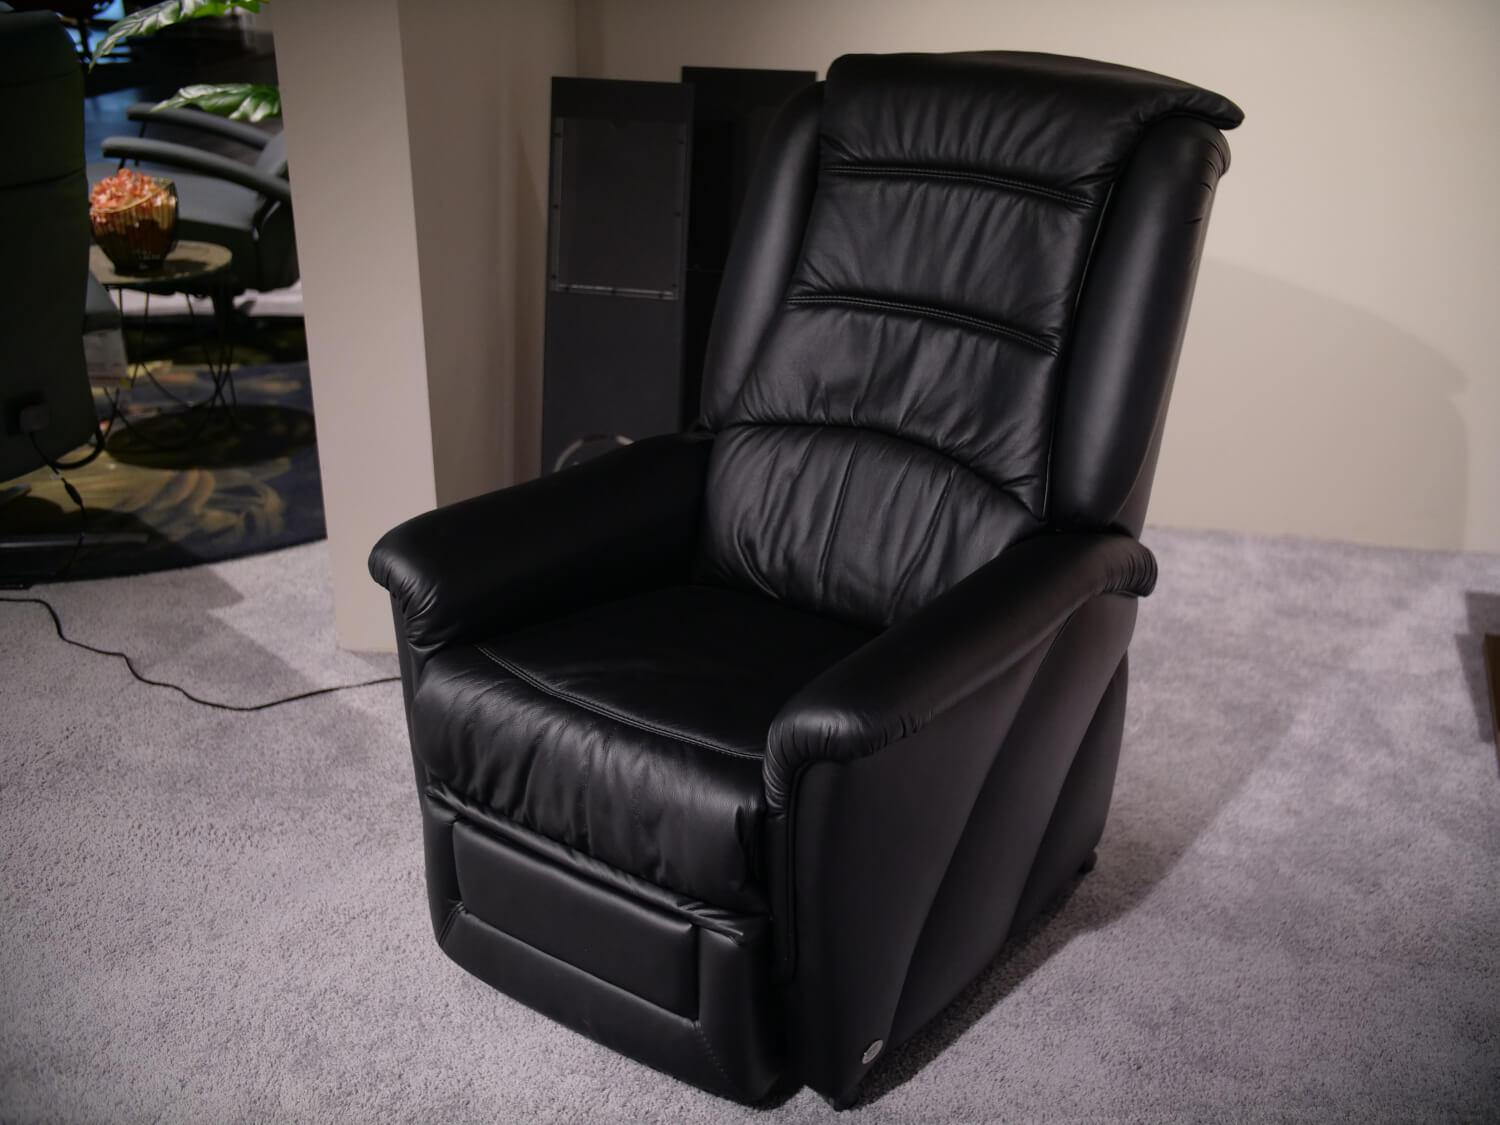 Massage-Sessel Cumulus 7832 Mini Bezug Leder Longlife Black Schwarz 3 Motorig Mit Aufstehhilfe